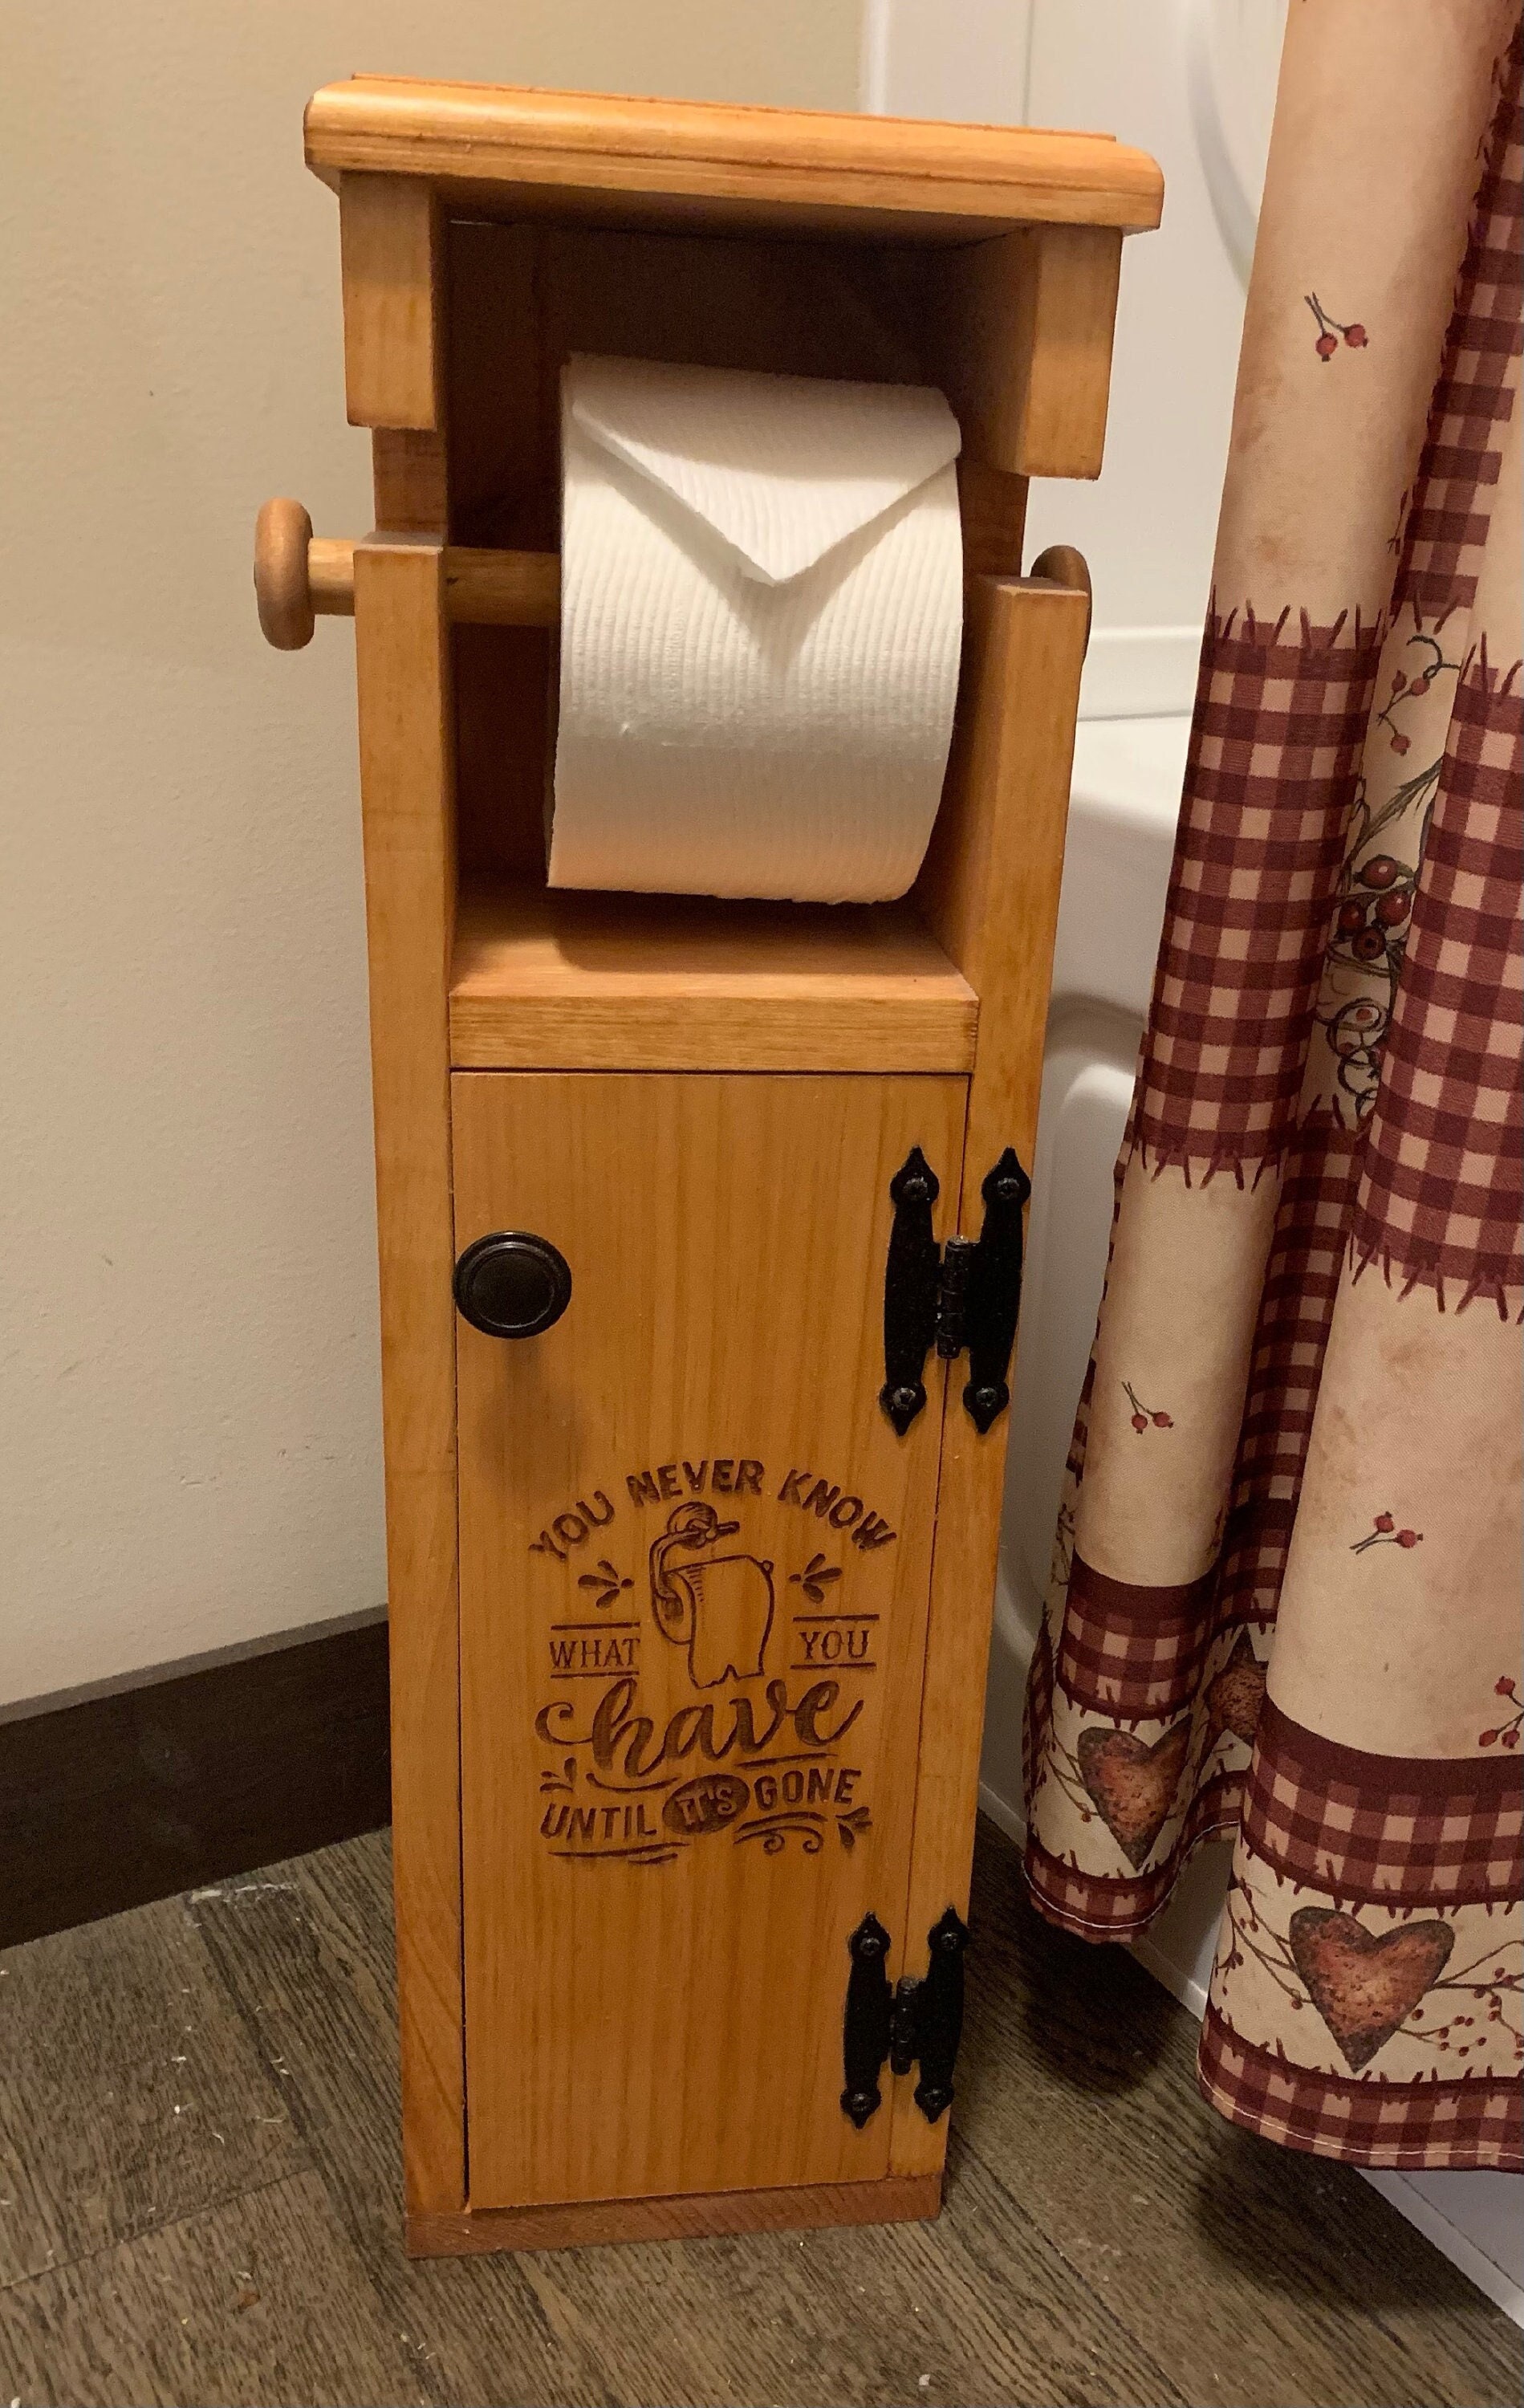 J JINXIAMU Toilet Paper Stand,Toilet Paper Holder Stand Behind Toilet  Storage for Restroom Cabinet,Bathroom